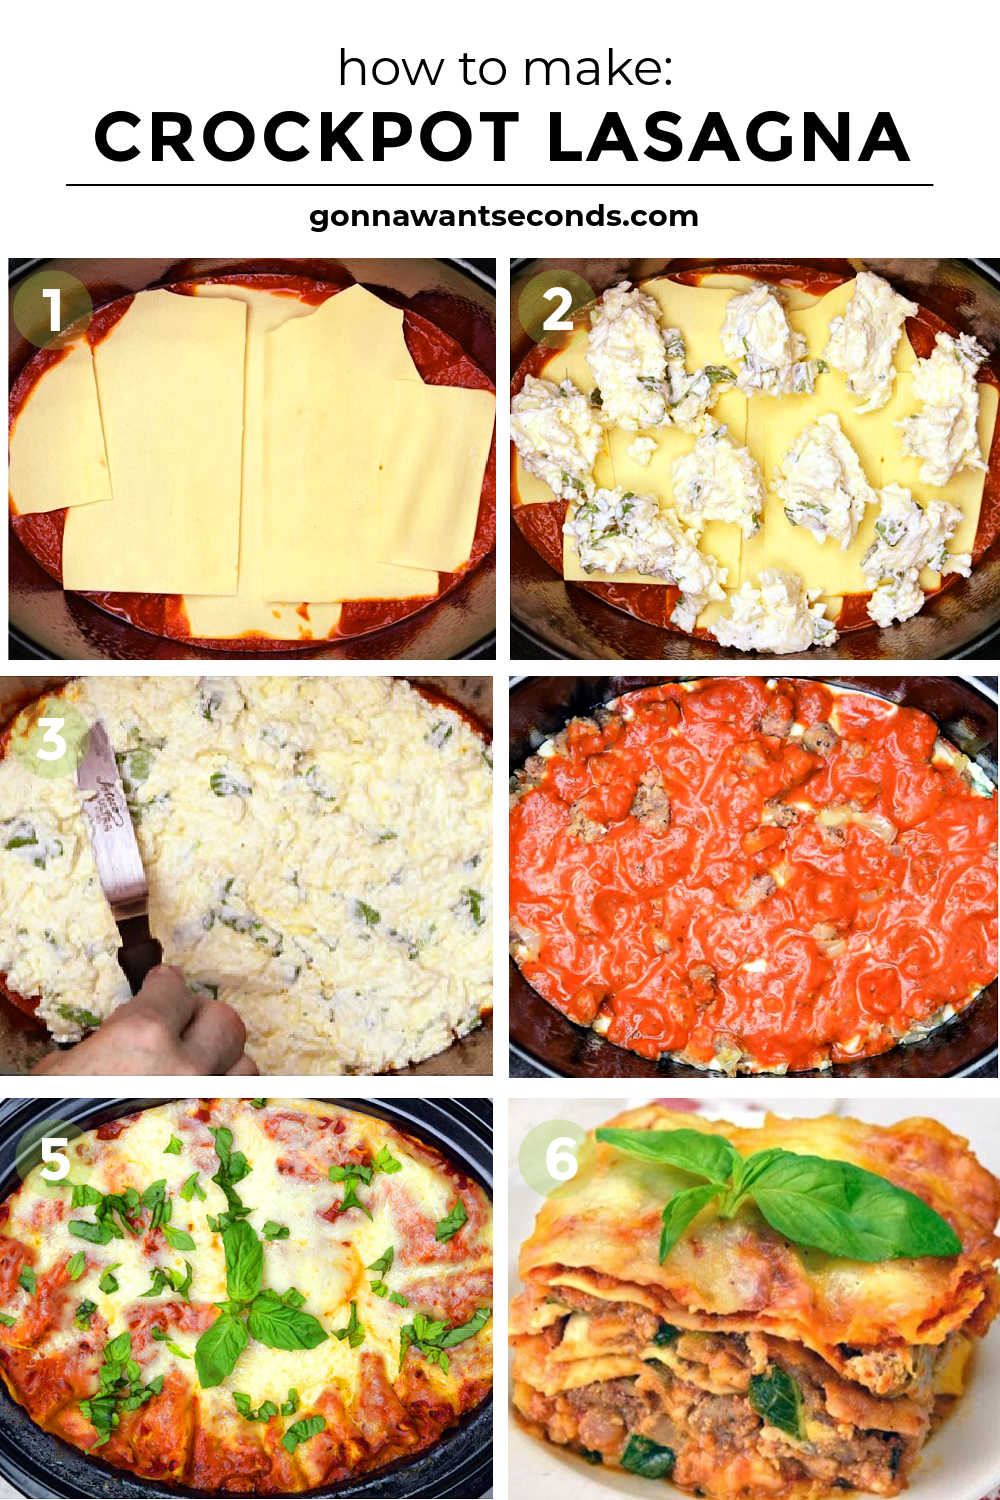 step by step how to make crockpot lasagna